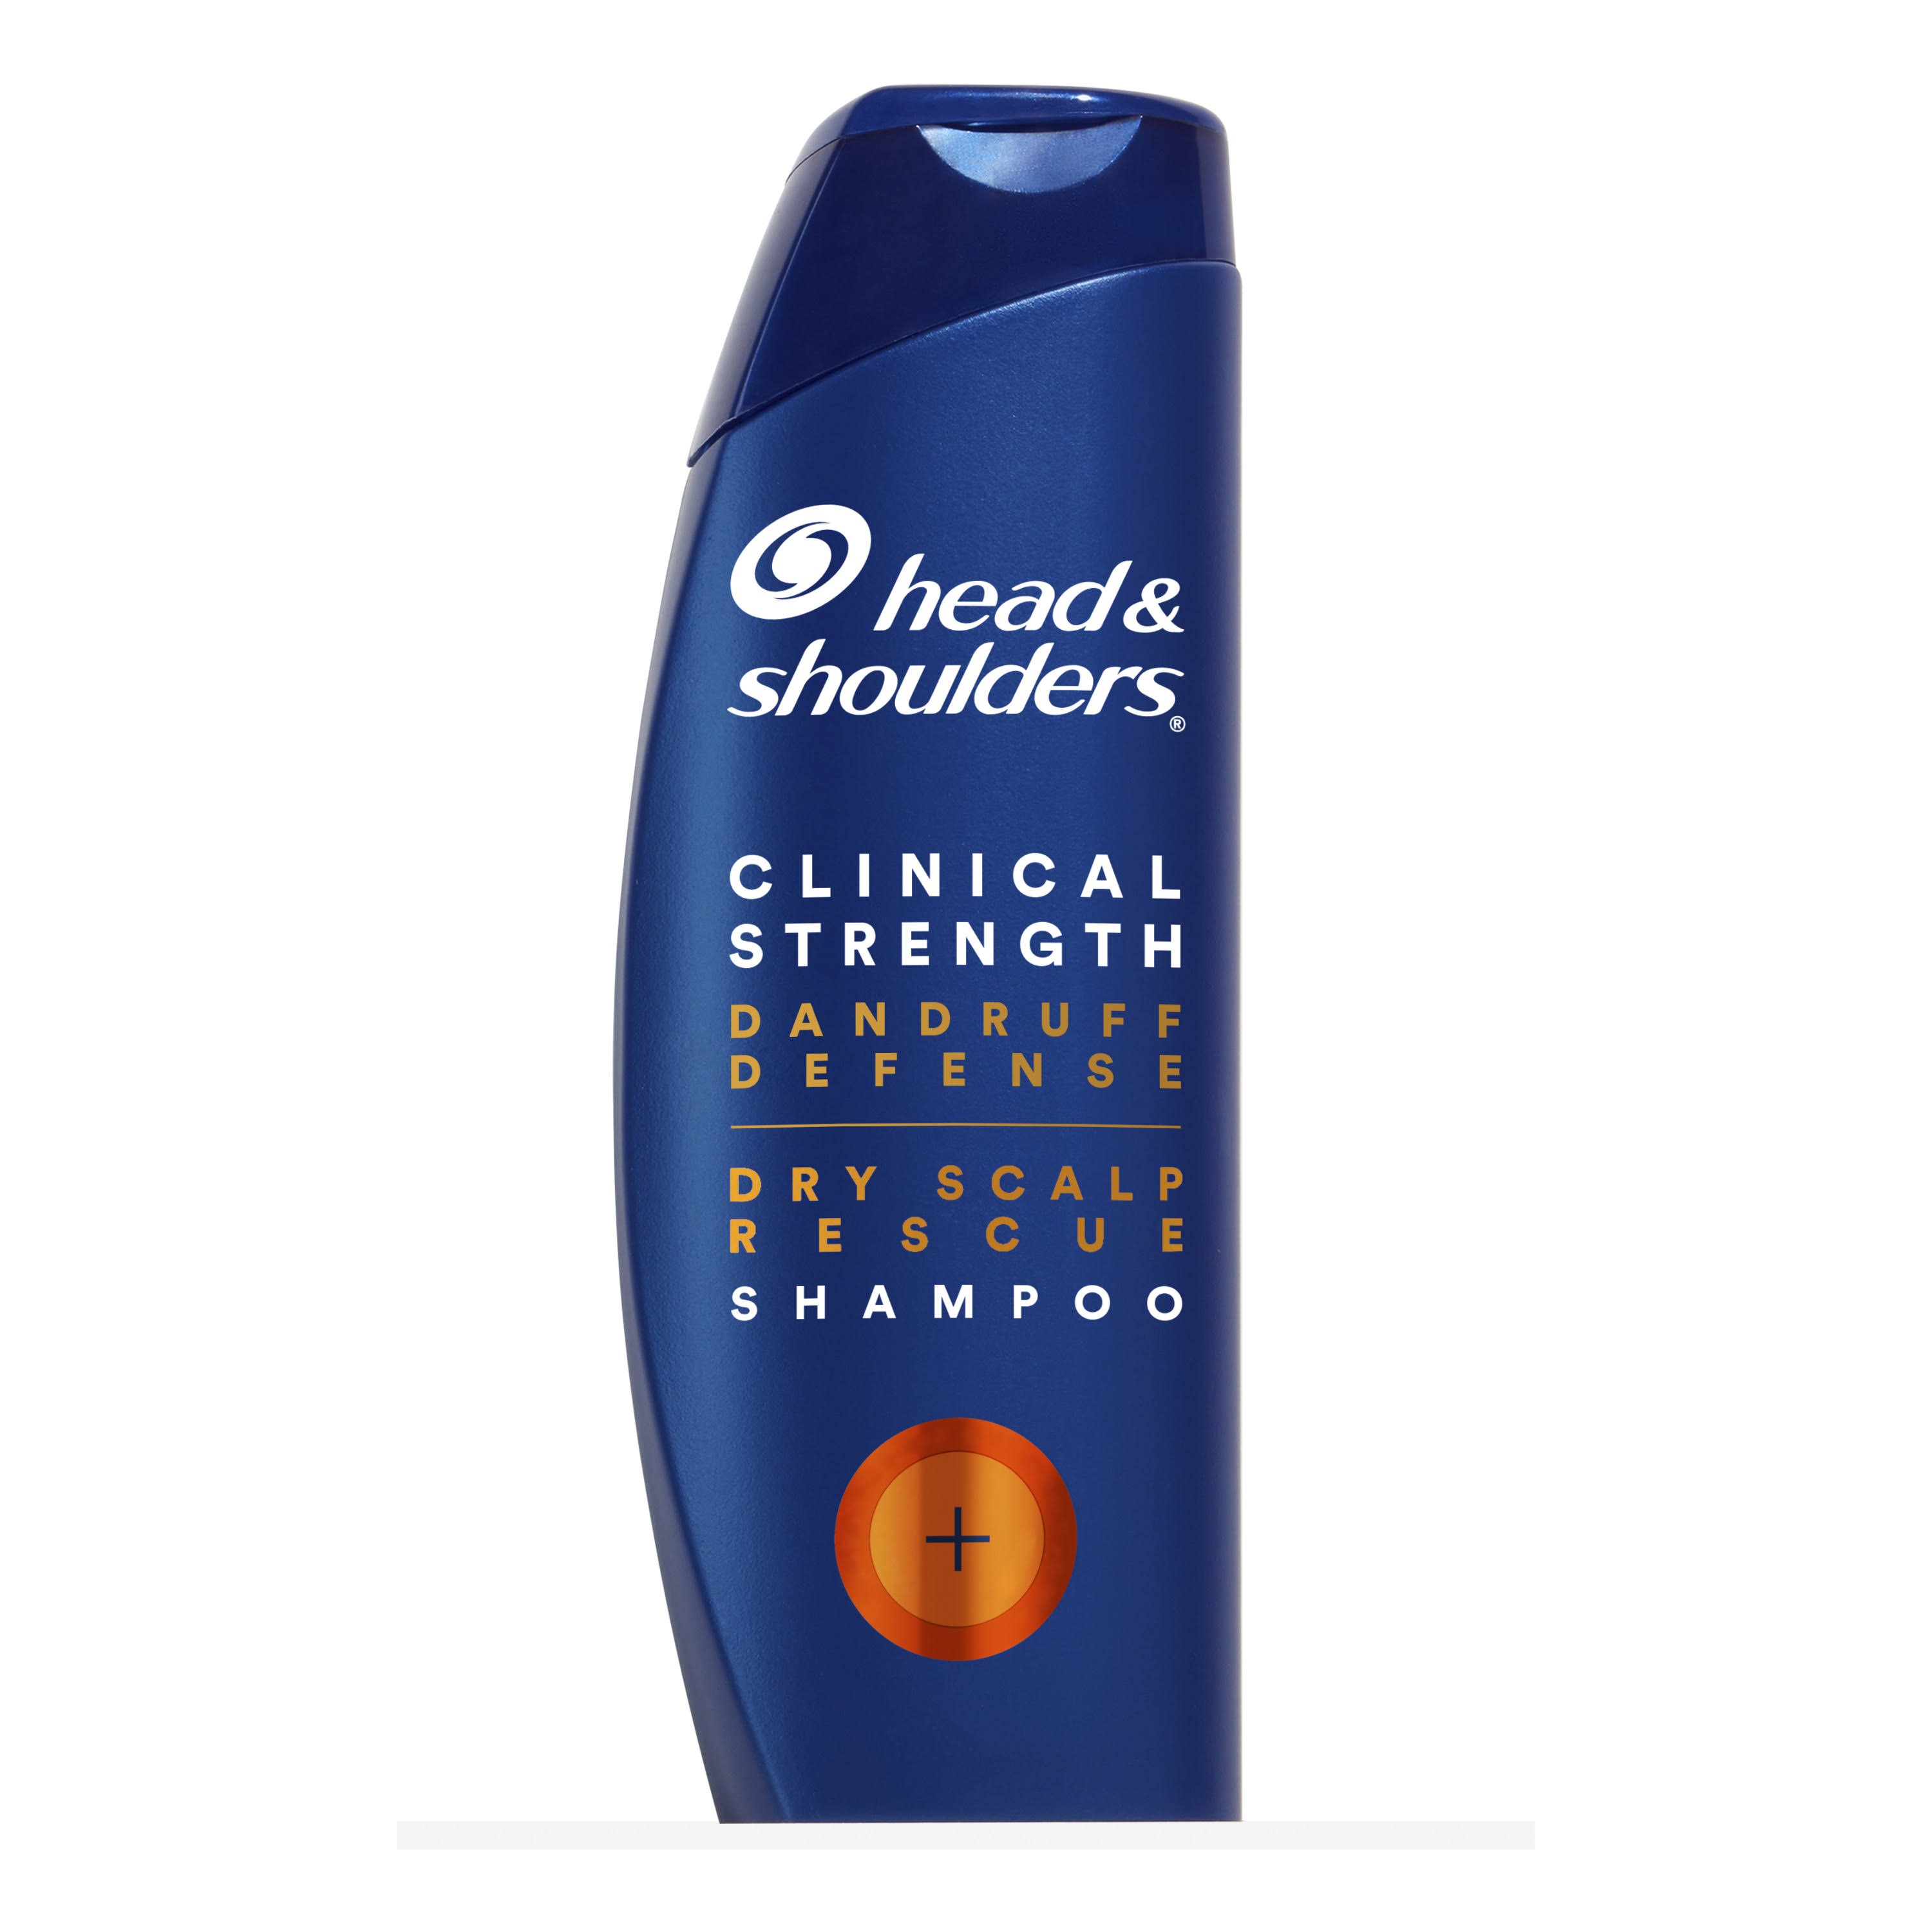 Head & Shoulders Clinical Dry Scalp Rescue Shampoo, 13.5 fl oz, 5.349